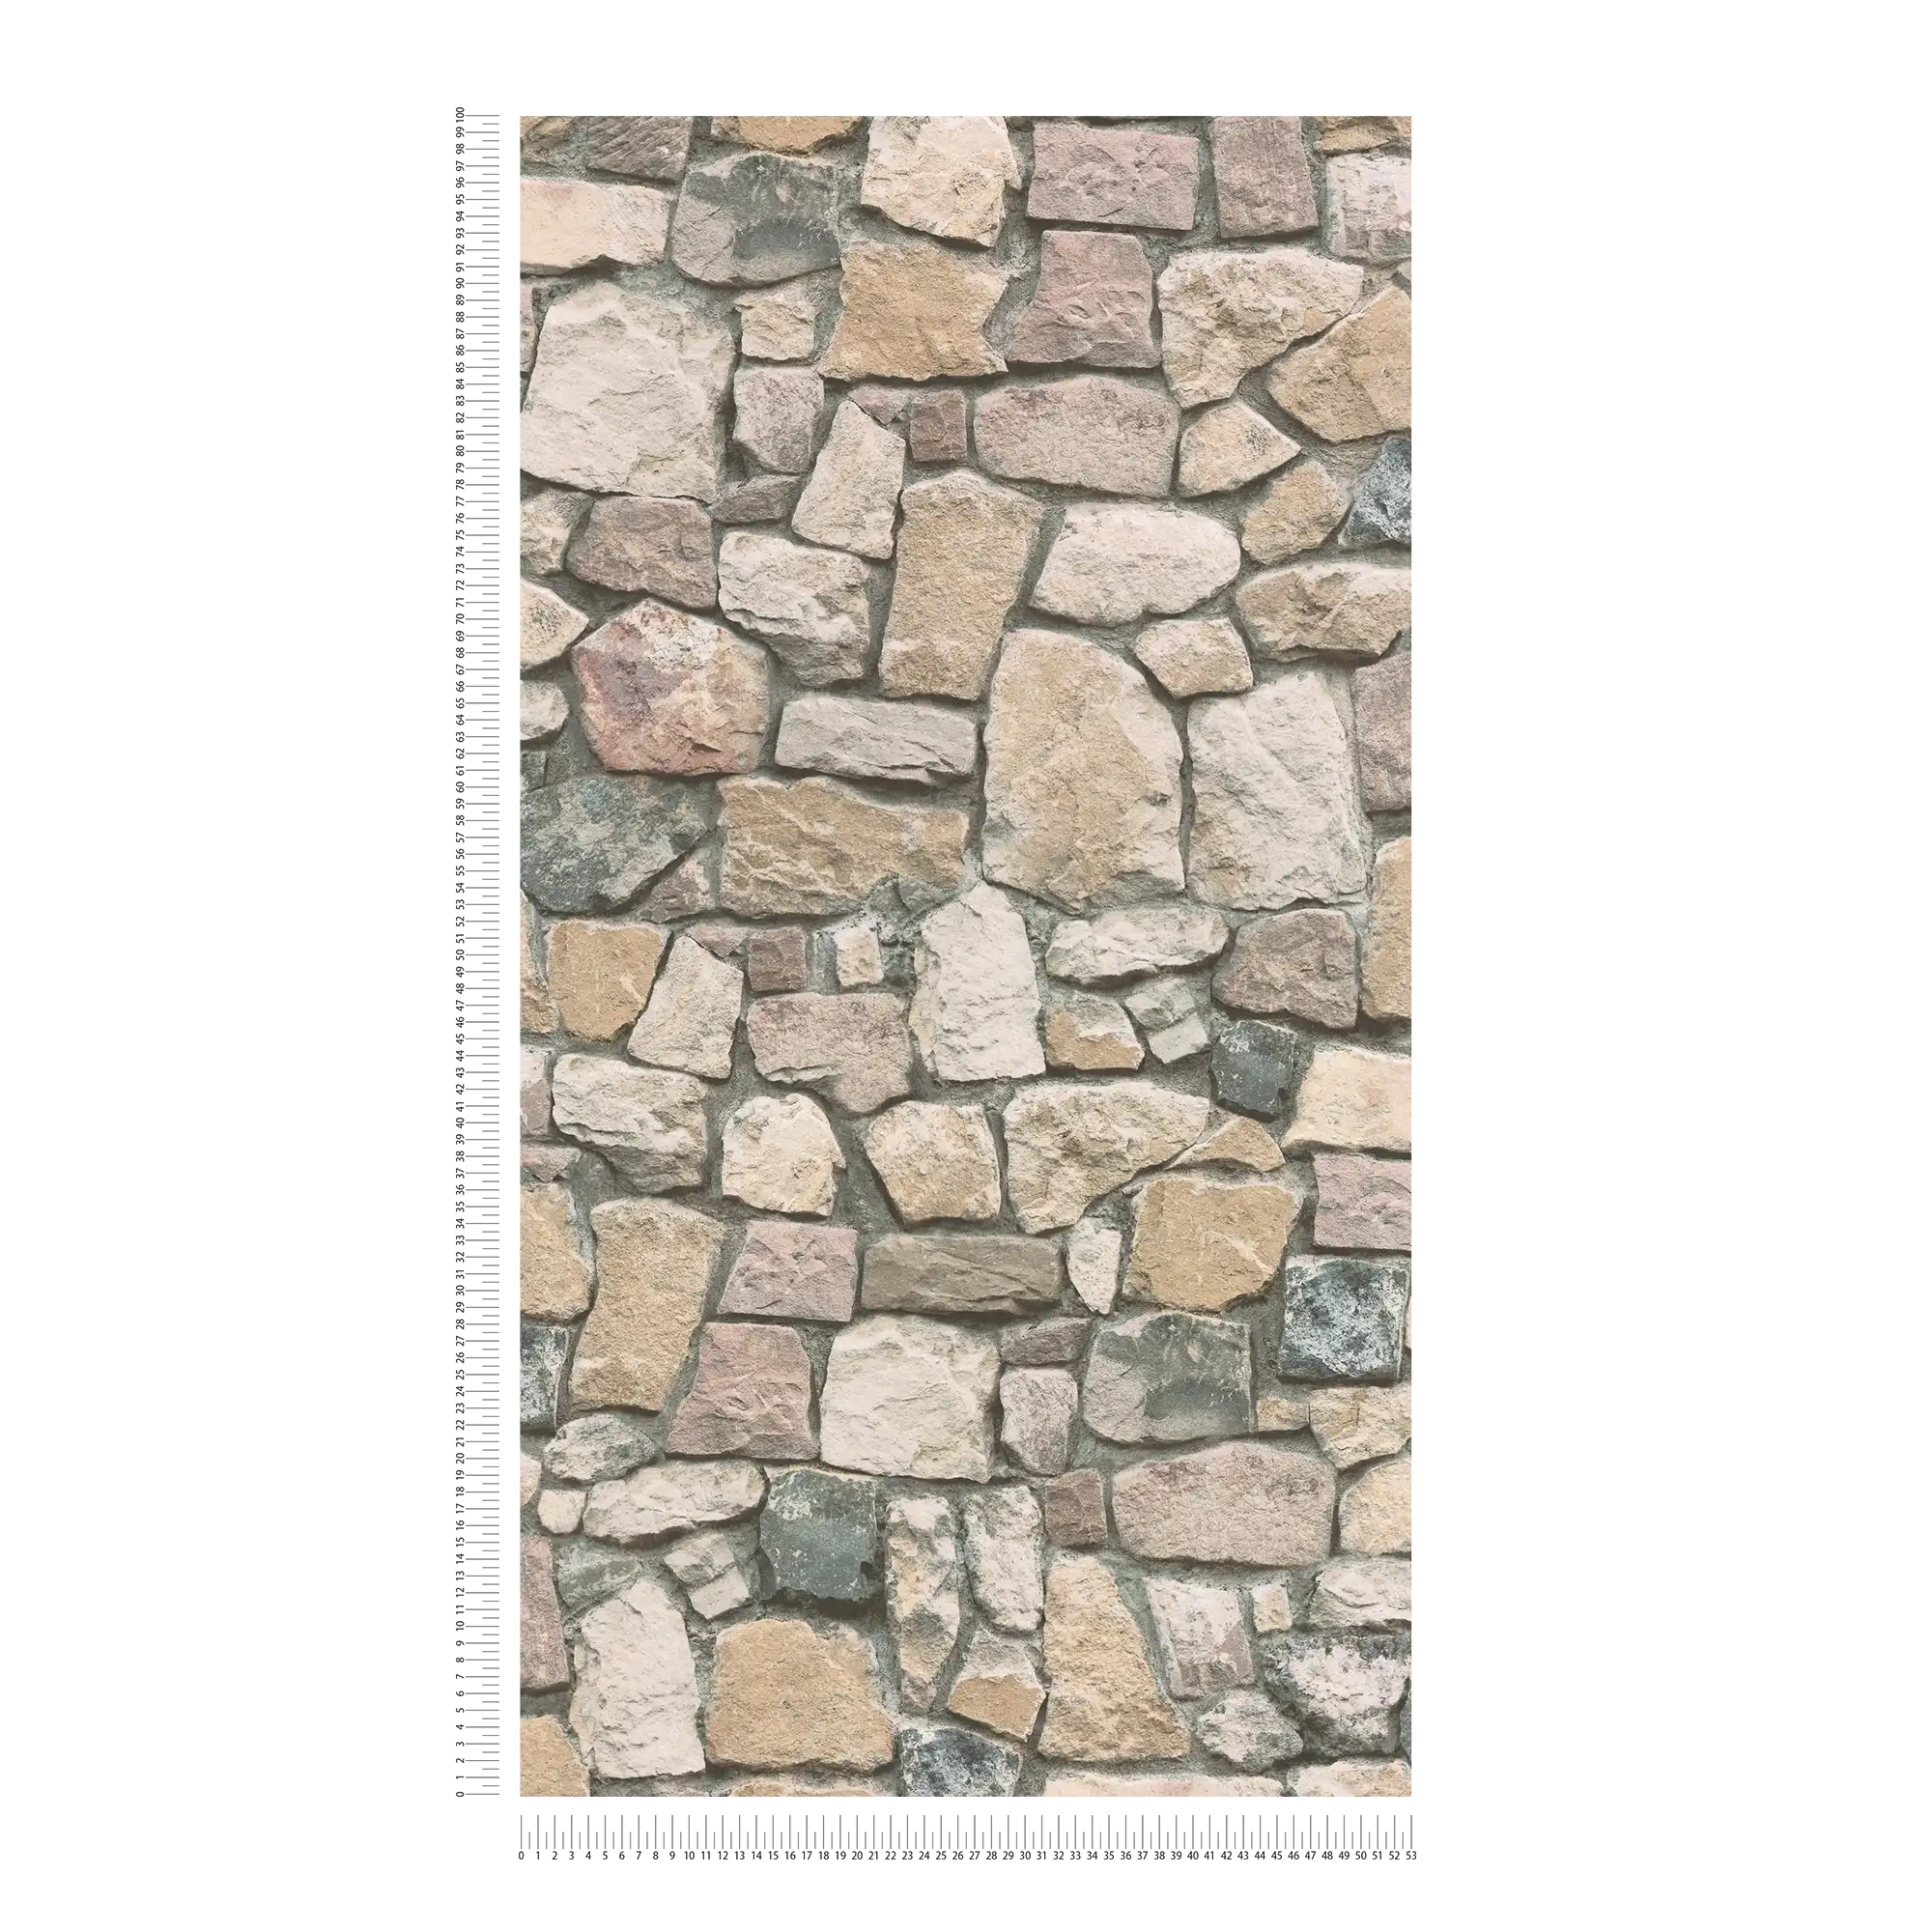             3D wallpaper with stone look & masonry - grey, cream
        